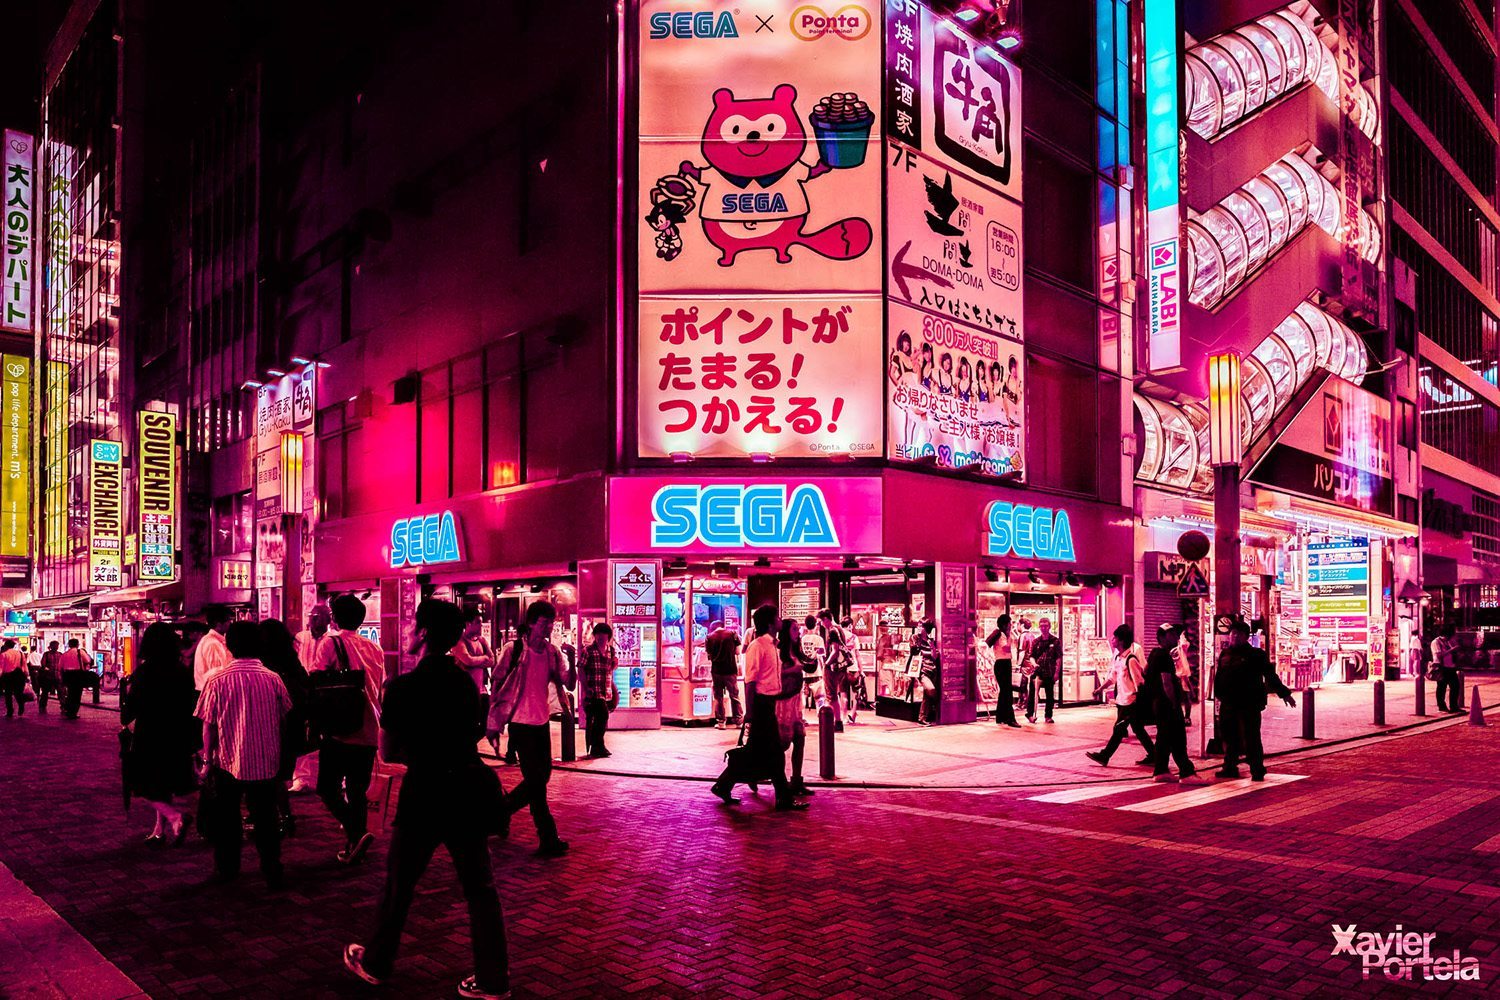 Tokyo's glow xavier portela rose_13